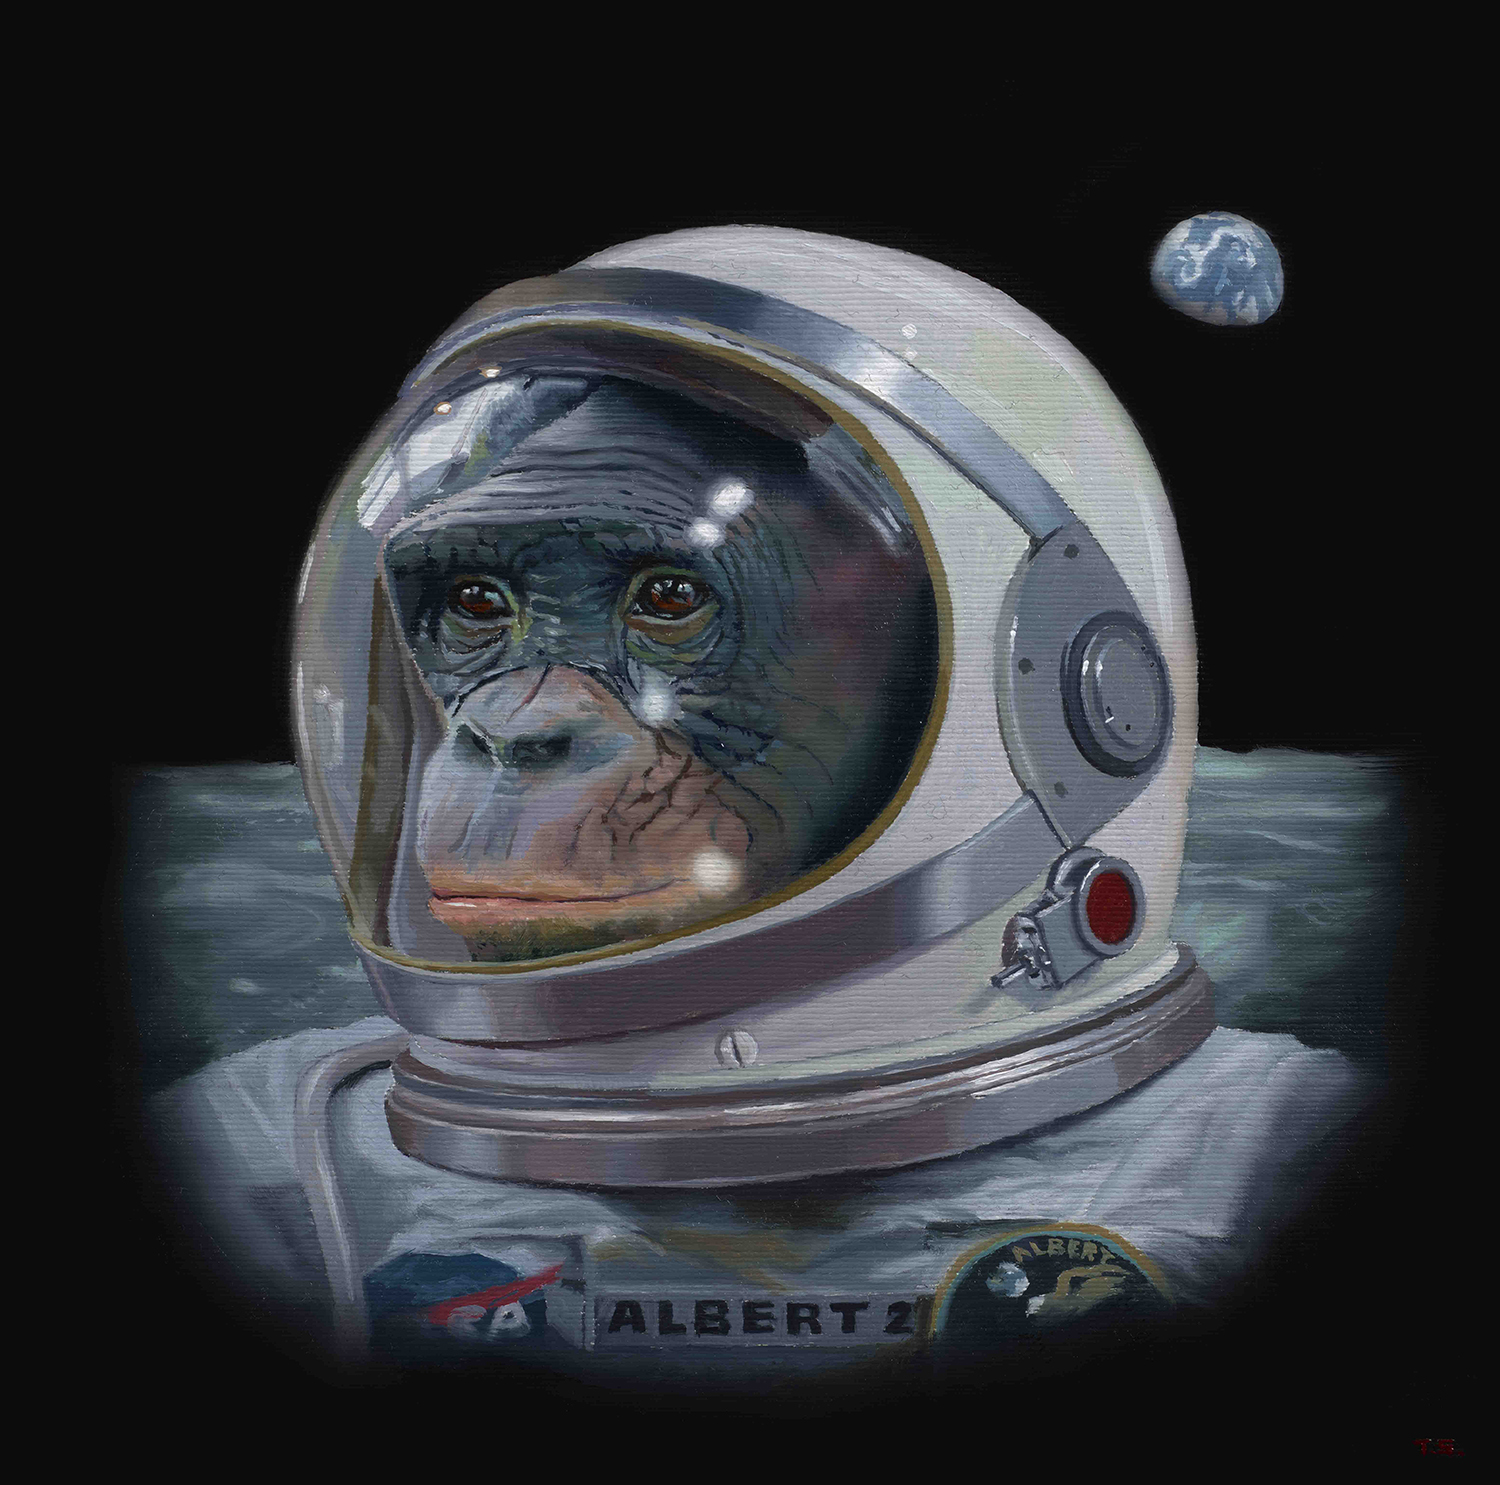 A monkey in a space suit - Tony South - Albert II